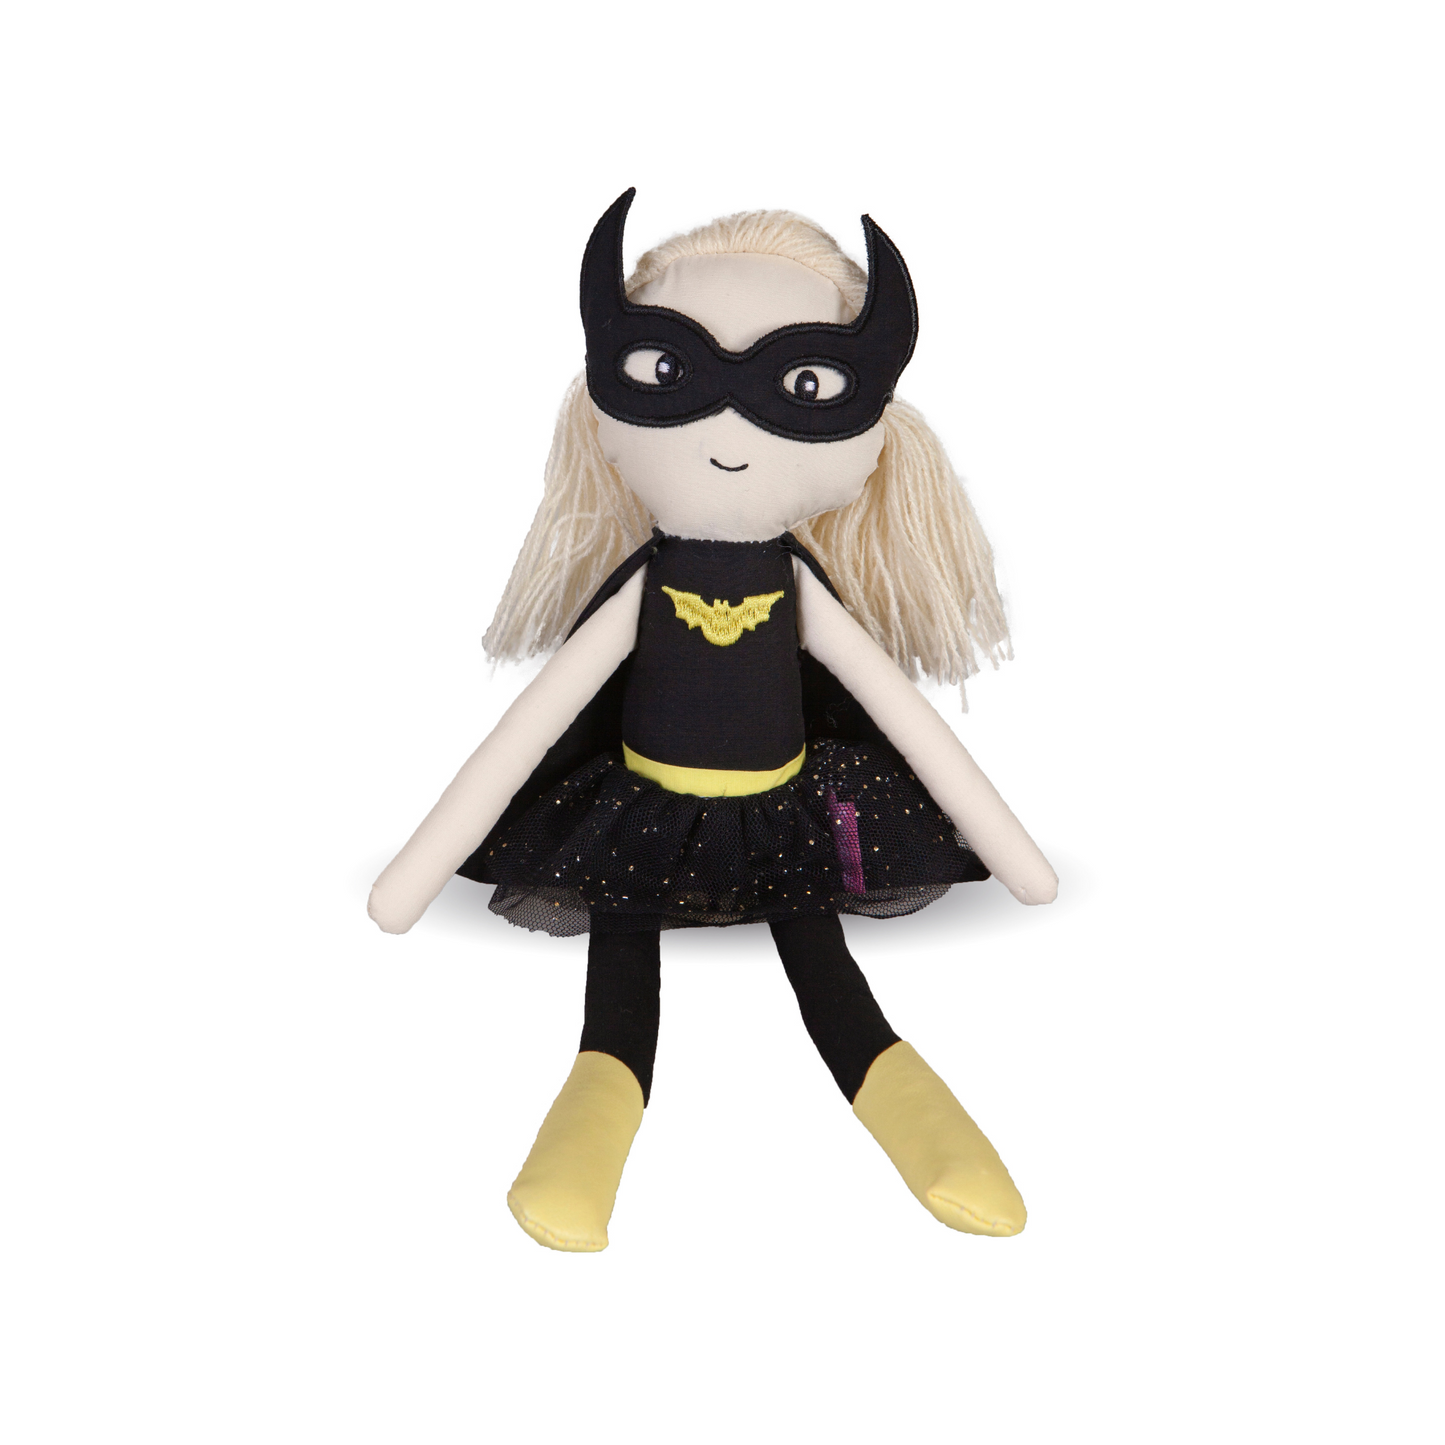 children's doll with batgirl costume